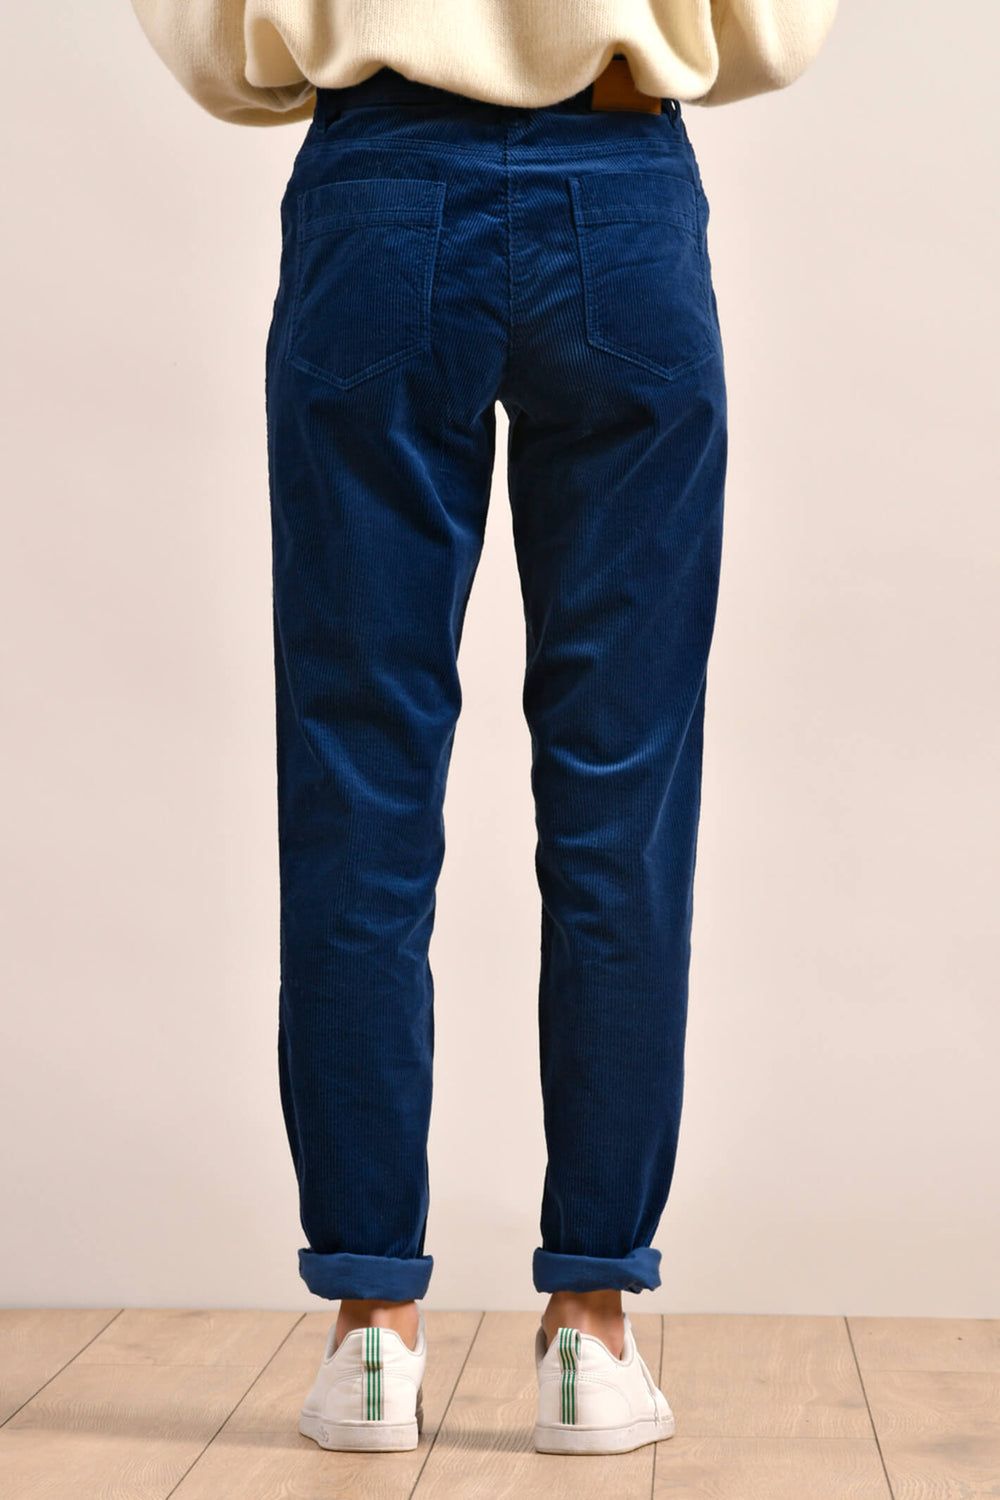 Mat De Misaine Perrycor-34728 U245 Blue Bleach Denim Cropped Jeans